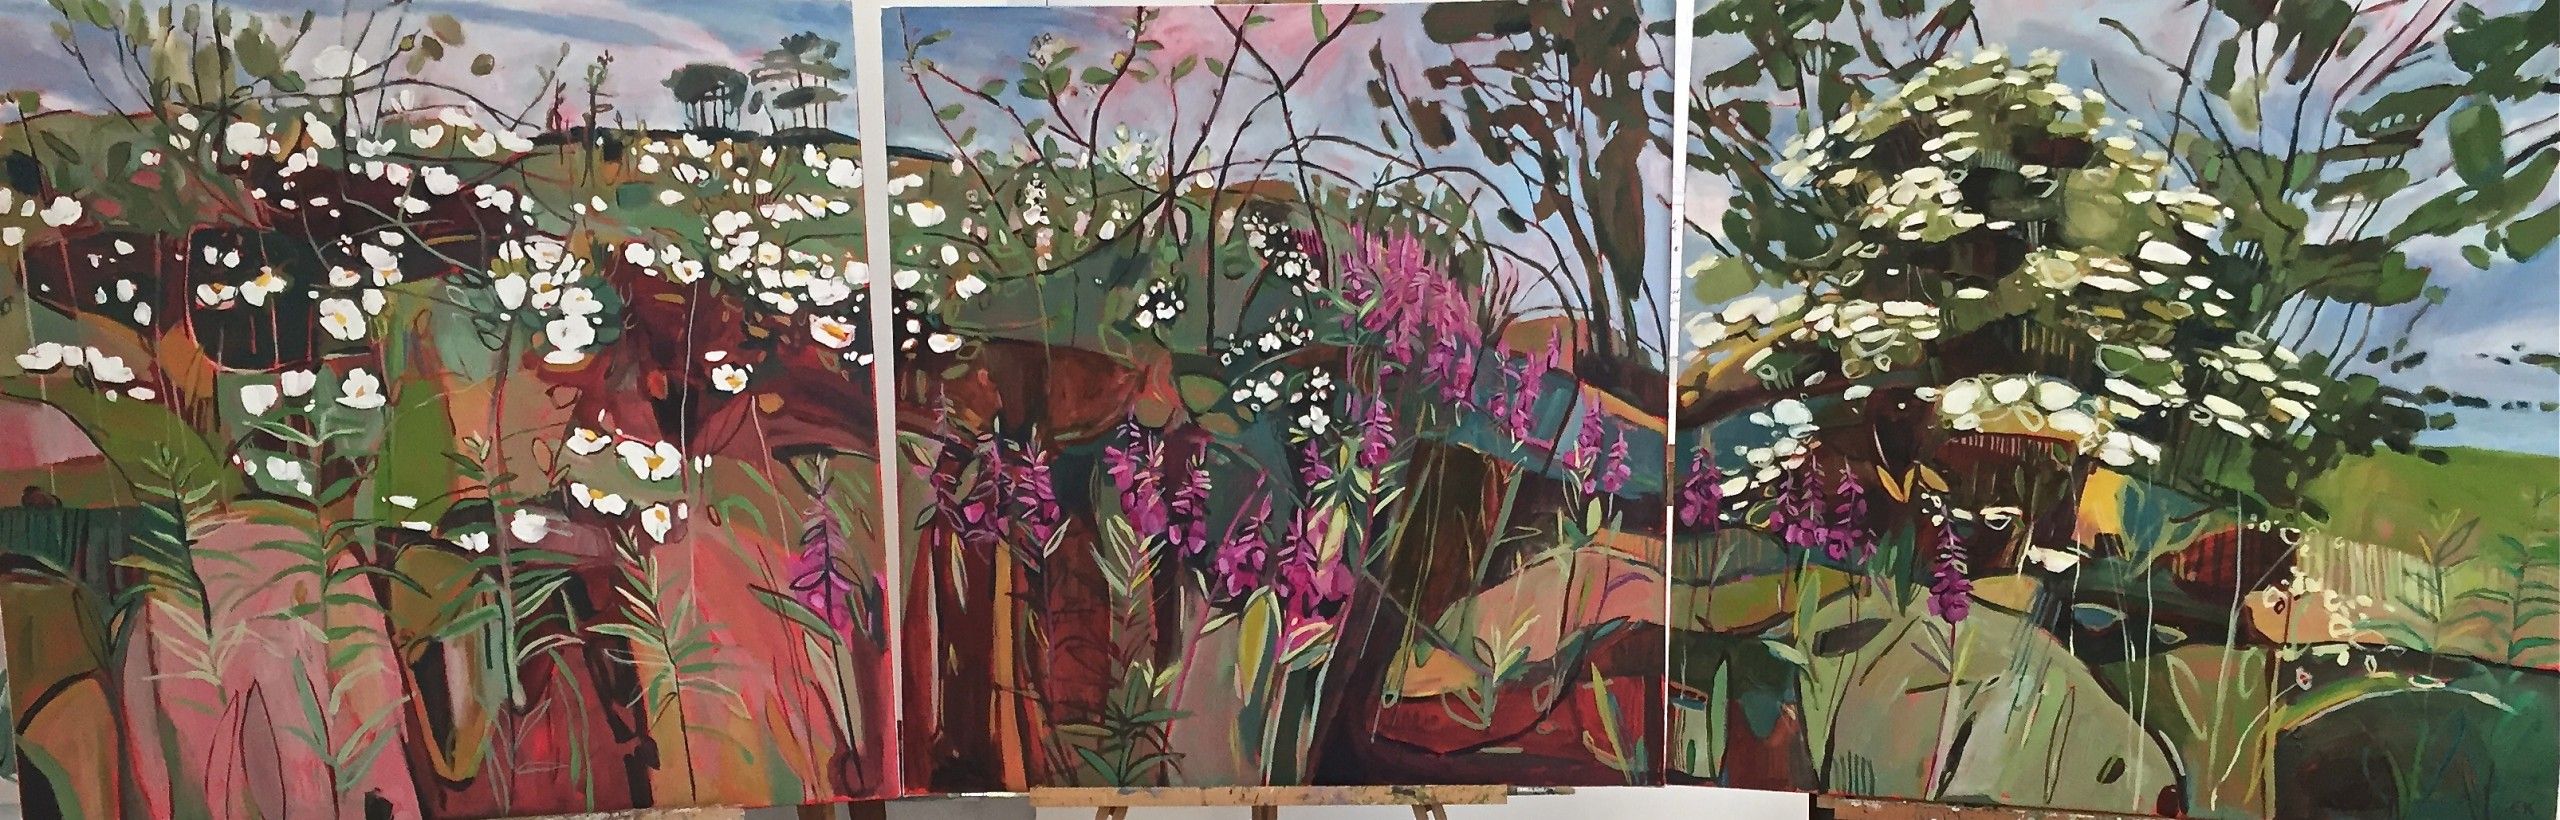 Midsummer : eglantine, bramble, rose bay willow herb and elder bush by Elaine Kazimierczuk